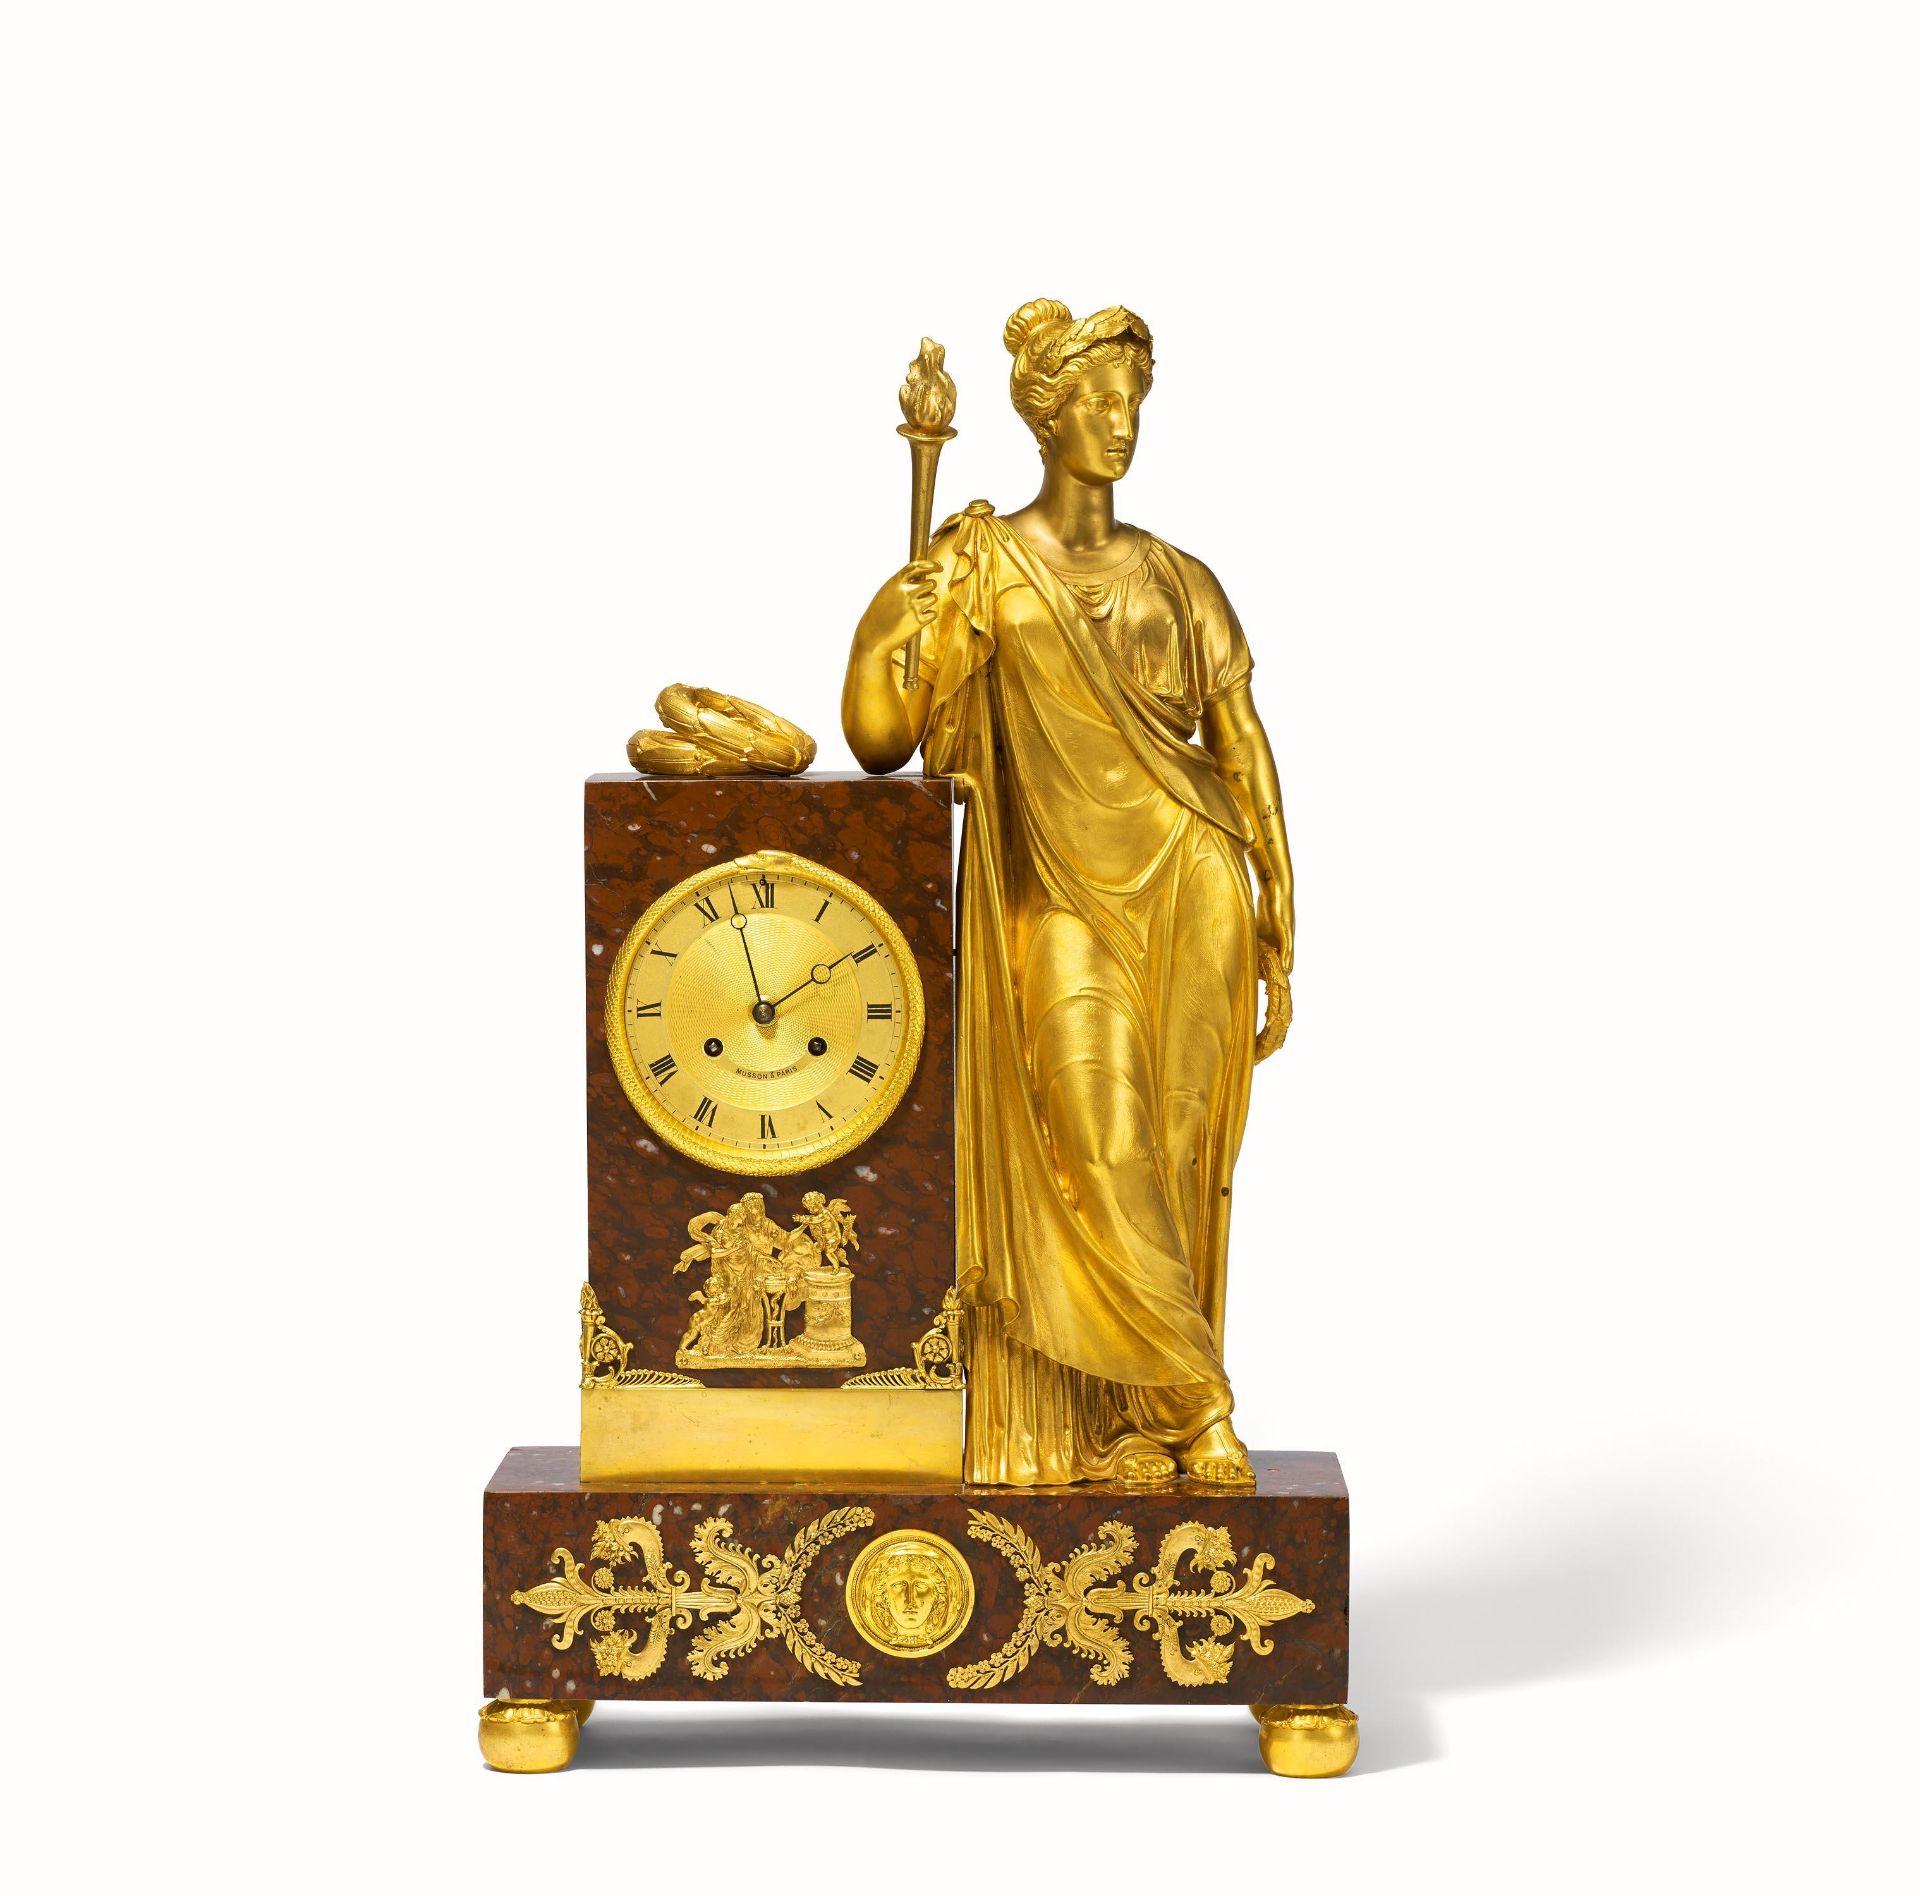 Impressive pendulum clock with allegory